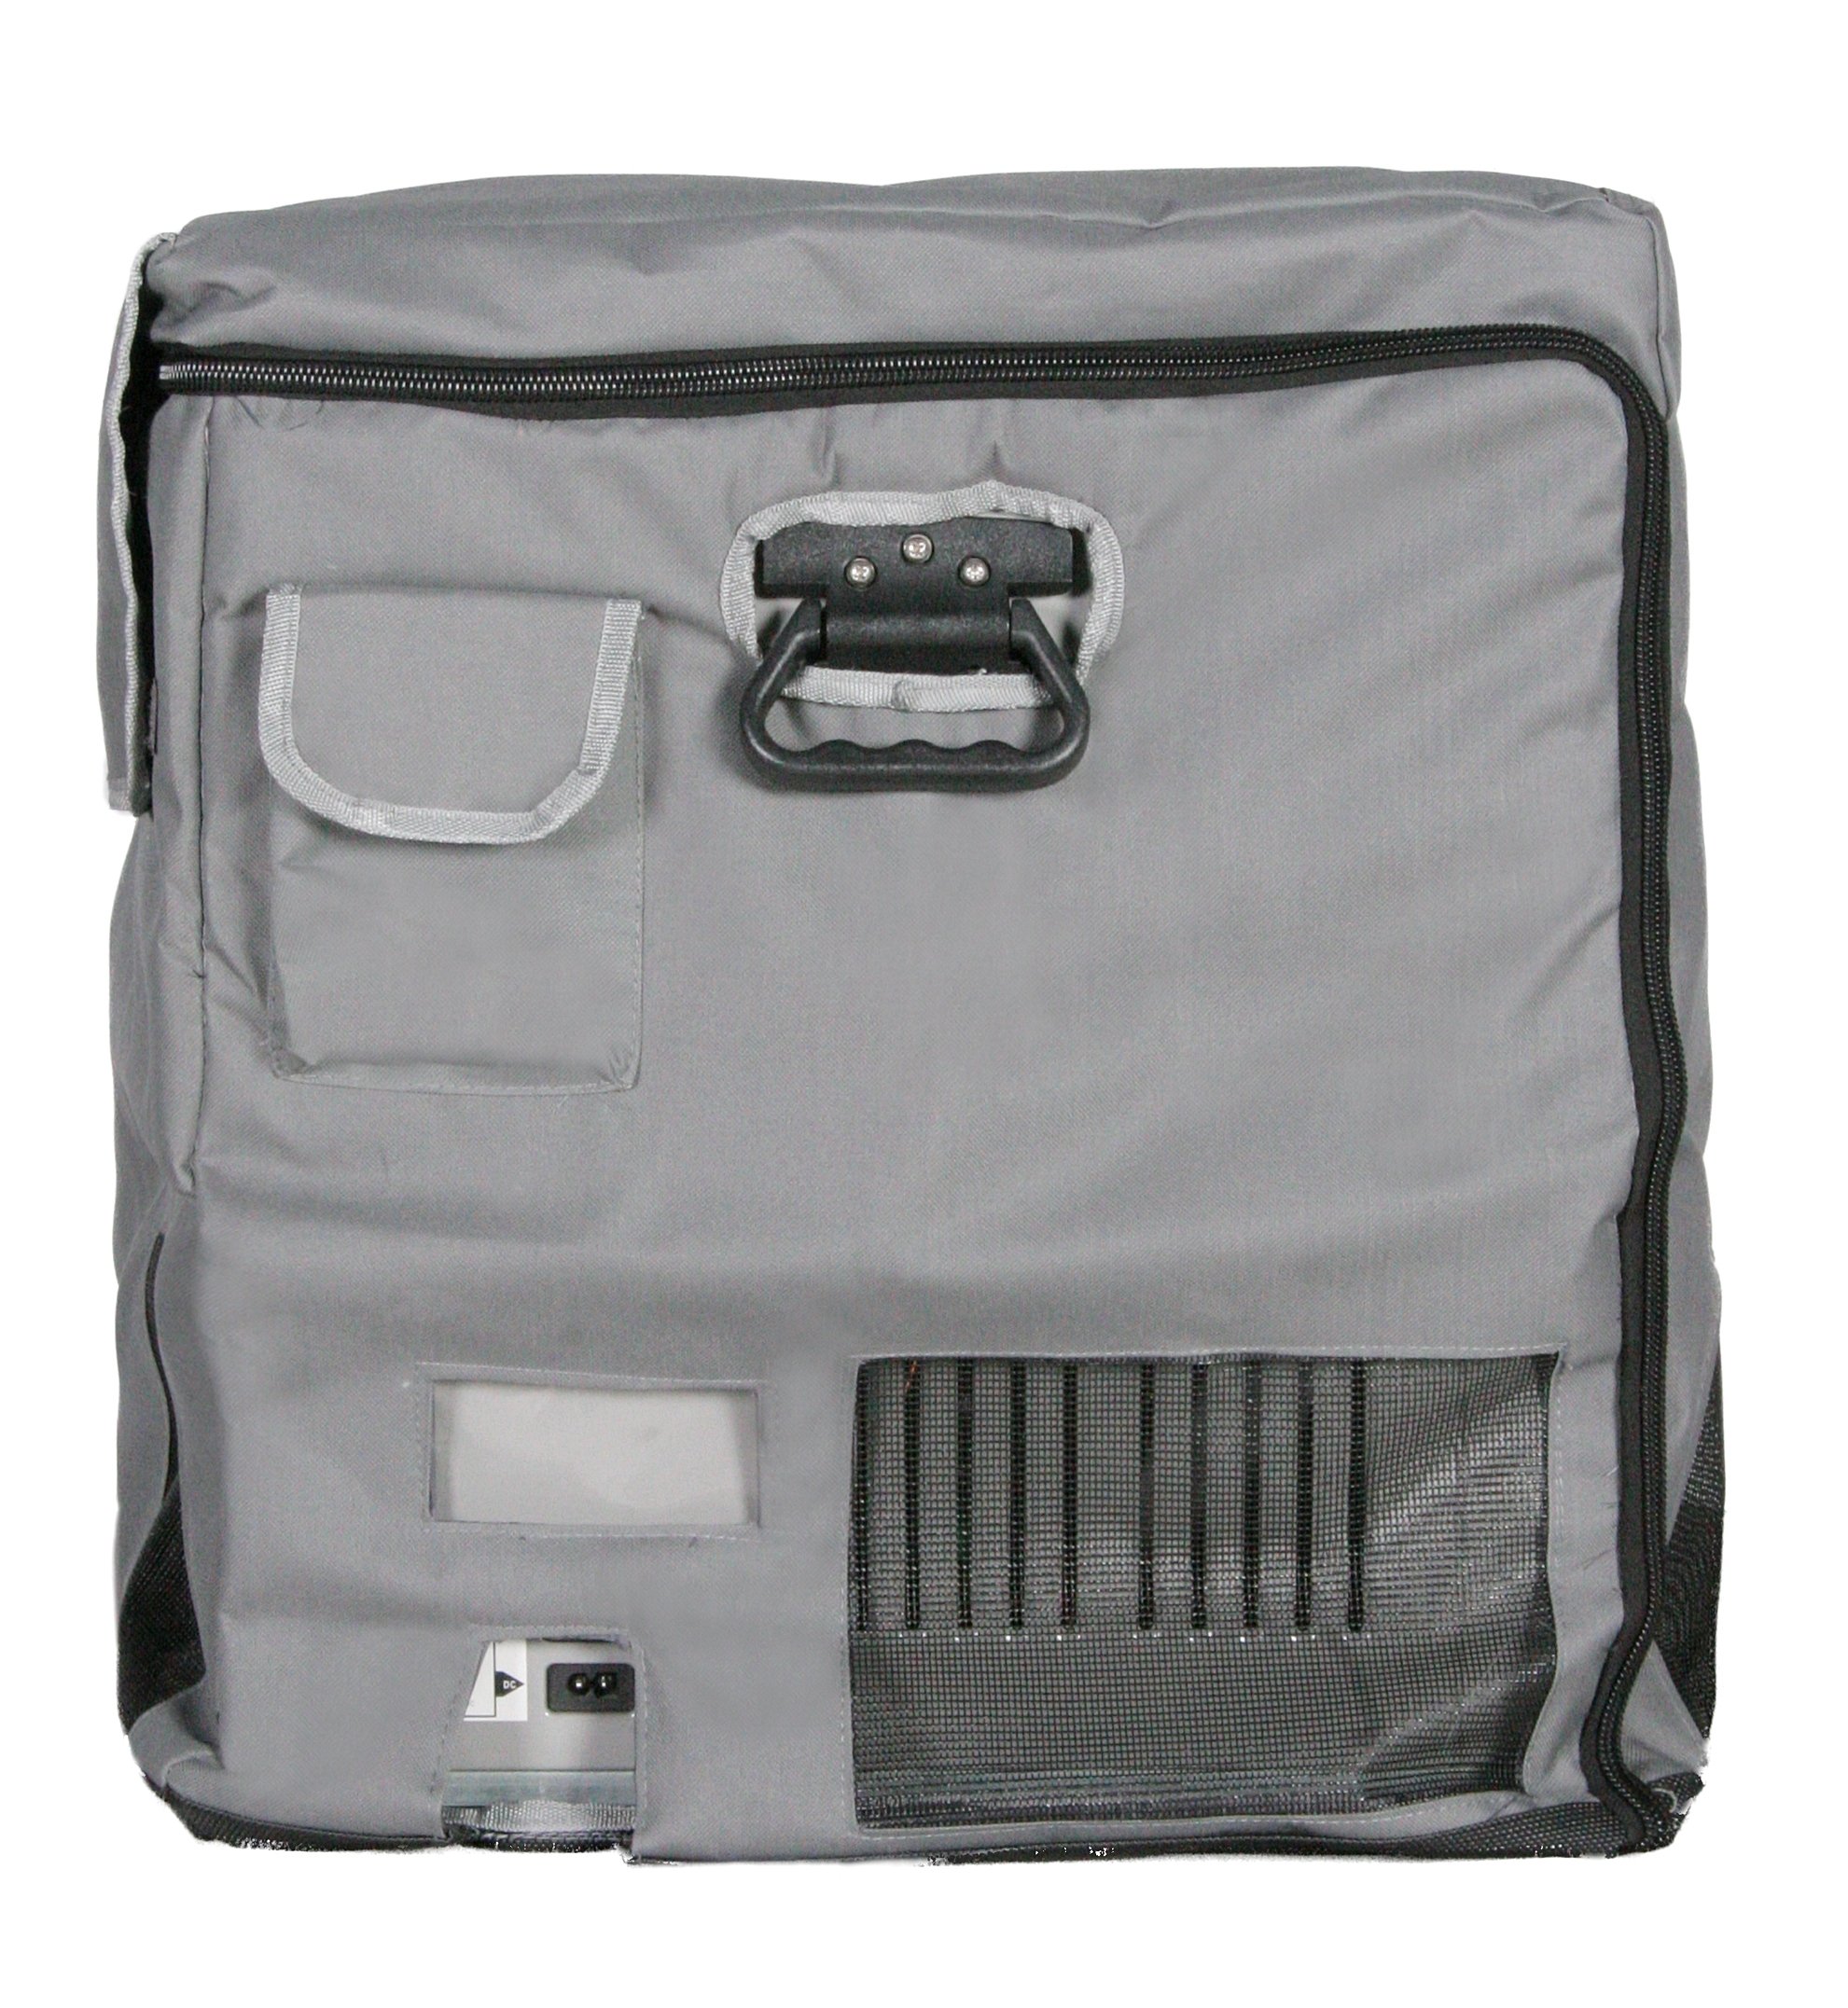 Whynter FM-6TBG Insulated Transit Bag for Portable Refrigerator/Freezer Model FM-65G, Gray